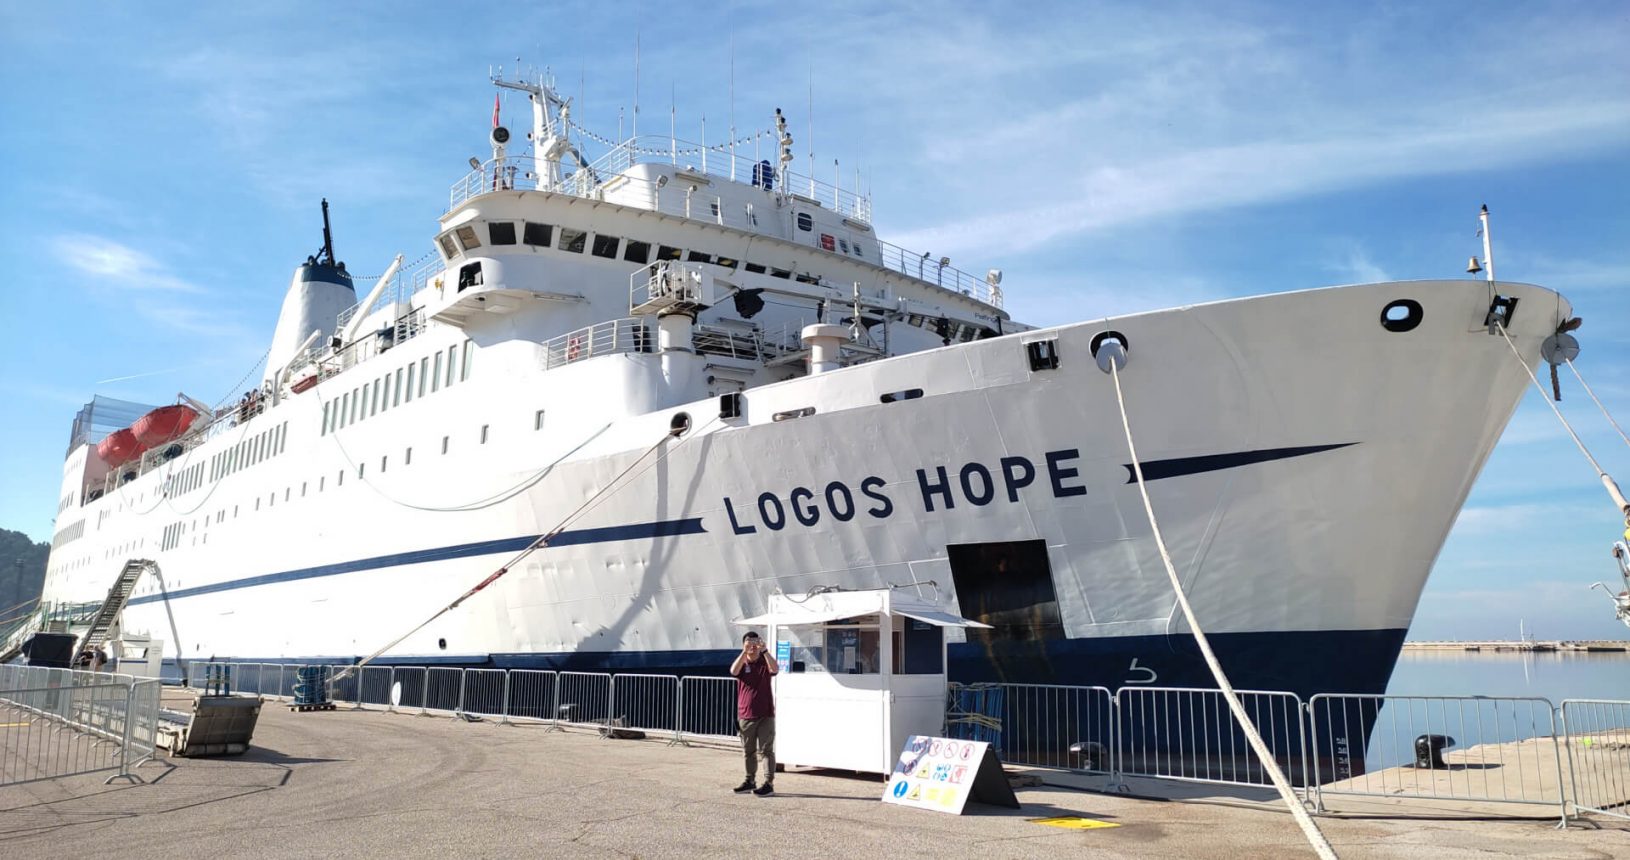 Gorgeous Logos Hope Cruise Ship